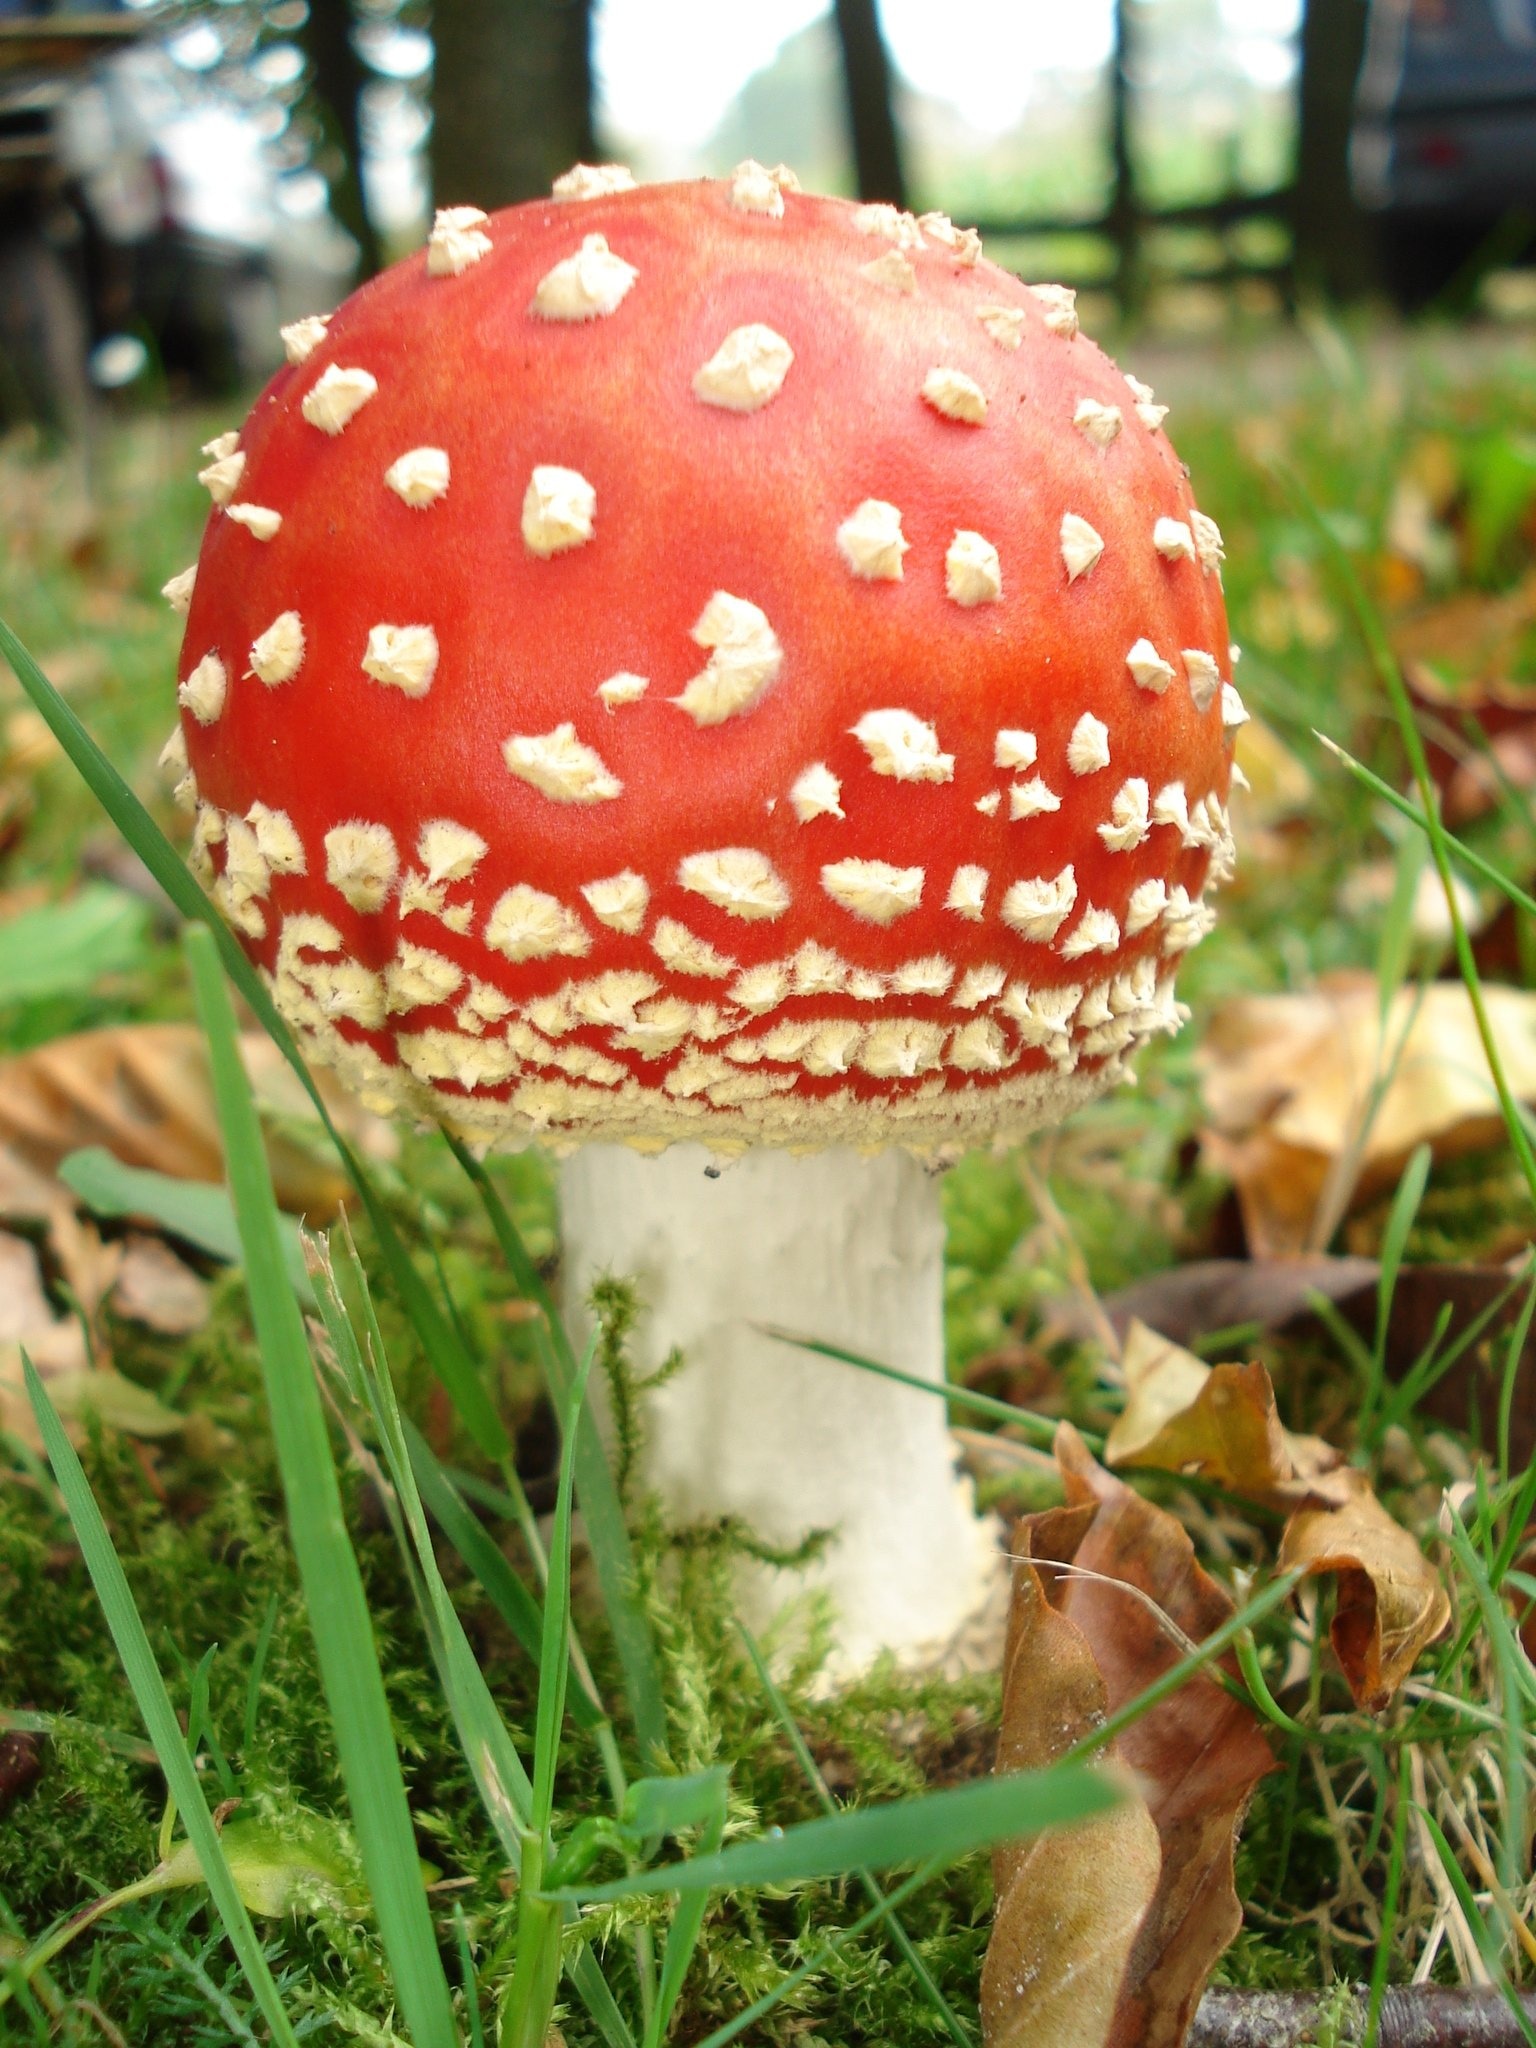 white and red mushroom